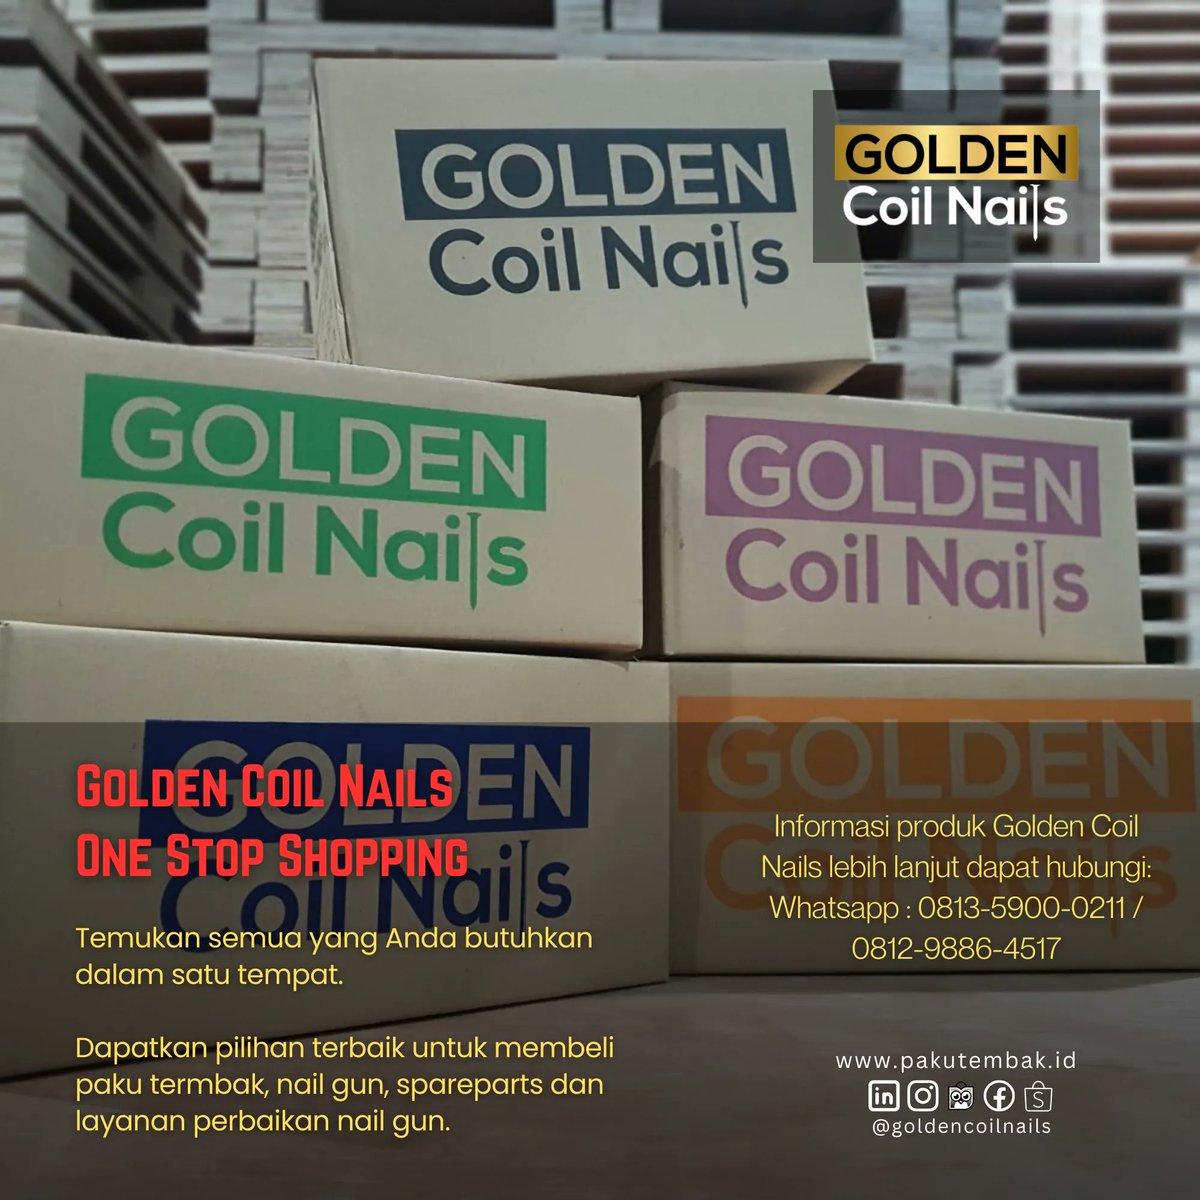 🔨 Perkuat perakitan pallet Anda dengan Golden Coil Nails! 🔨

#pakutembak #goldencoilnails #pallet #palletwood #palletkayu #paku #kayu #kayupallet #plywood #pakutembakgolden #goldenpakutembak #produksilokal #terbaik #CN55 #CN70 #coilnailer #onestopshopping